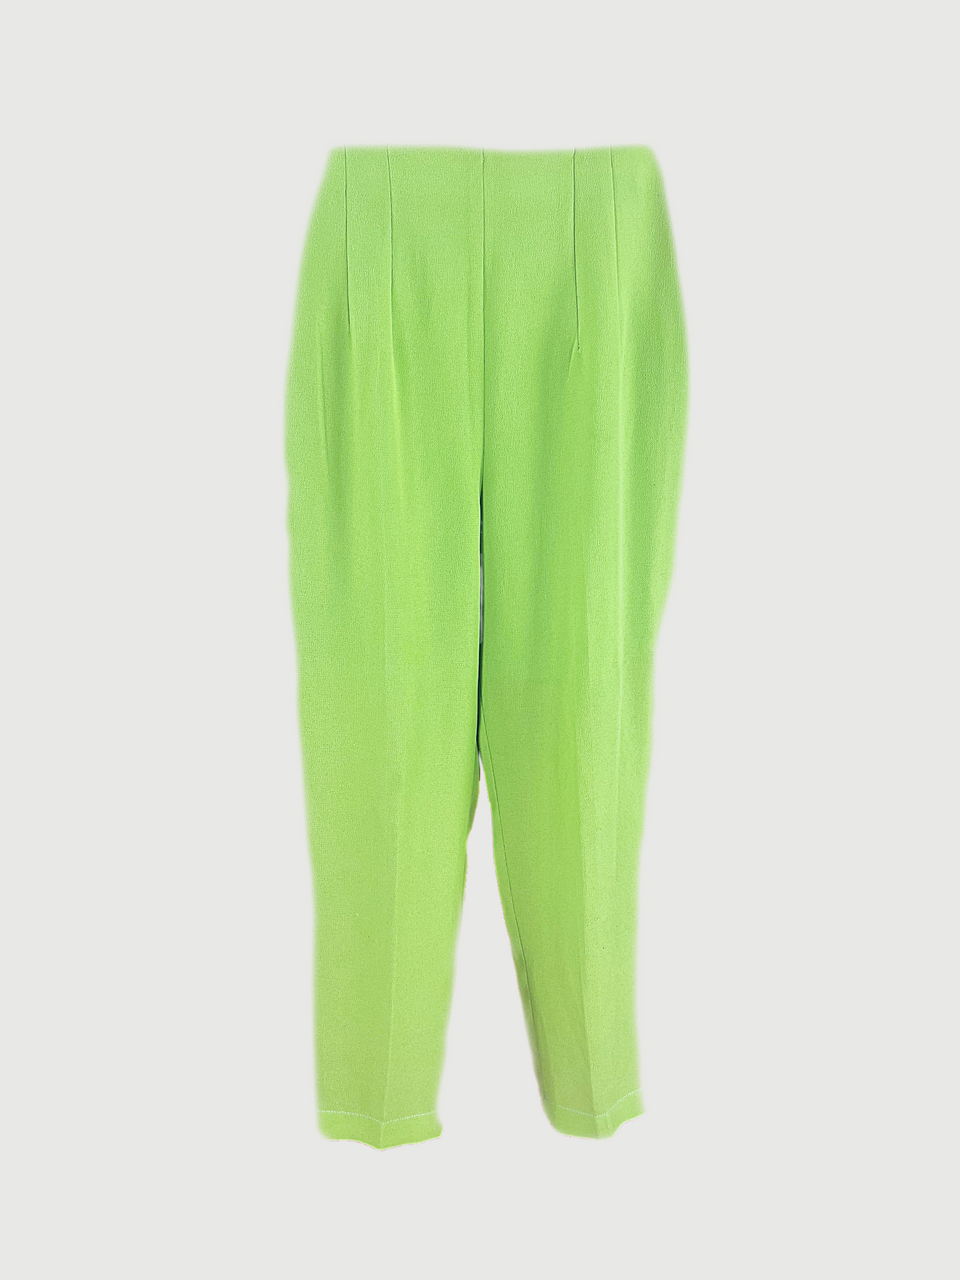 Slime Green Pants